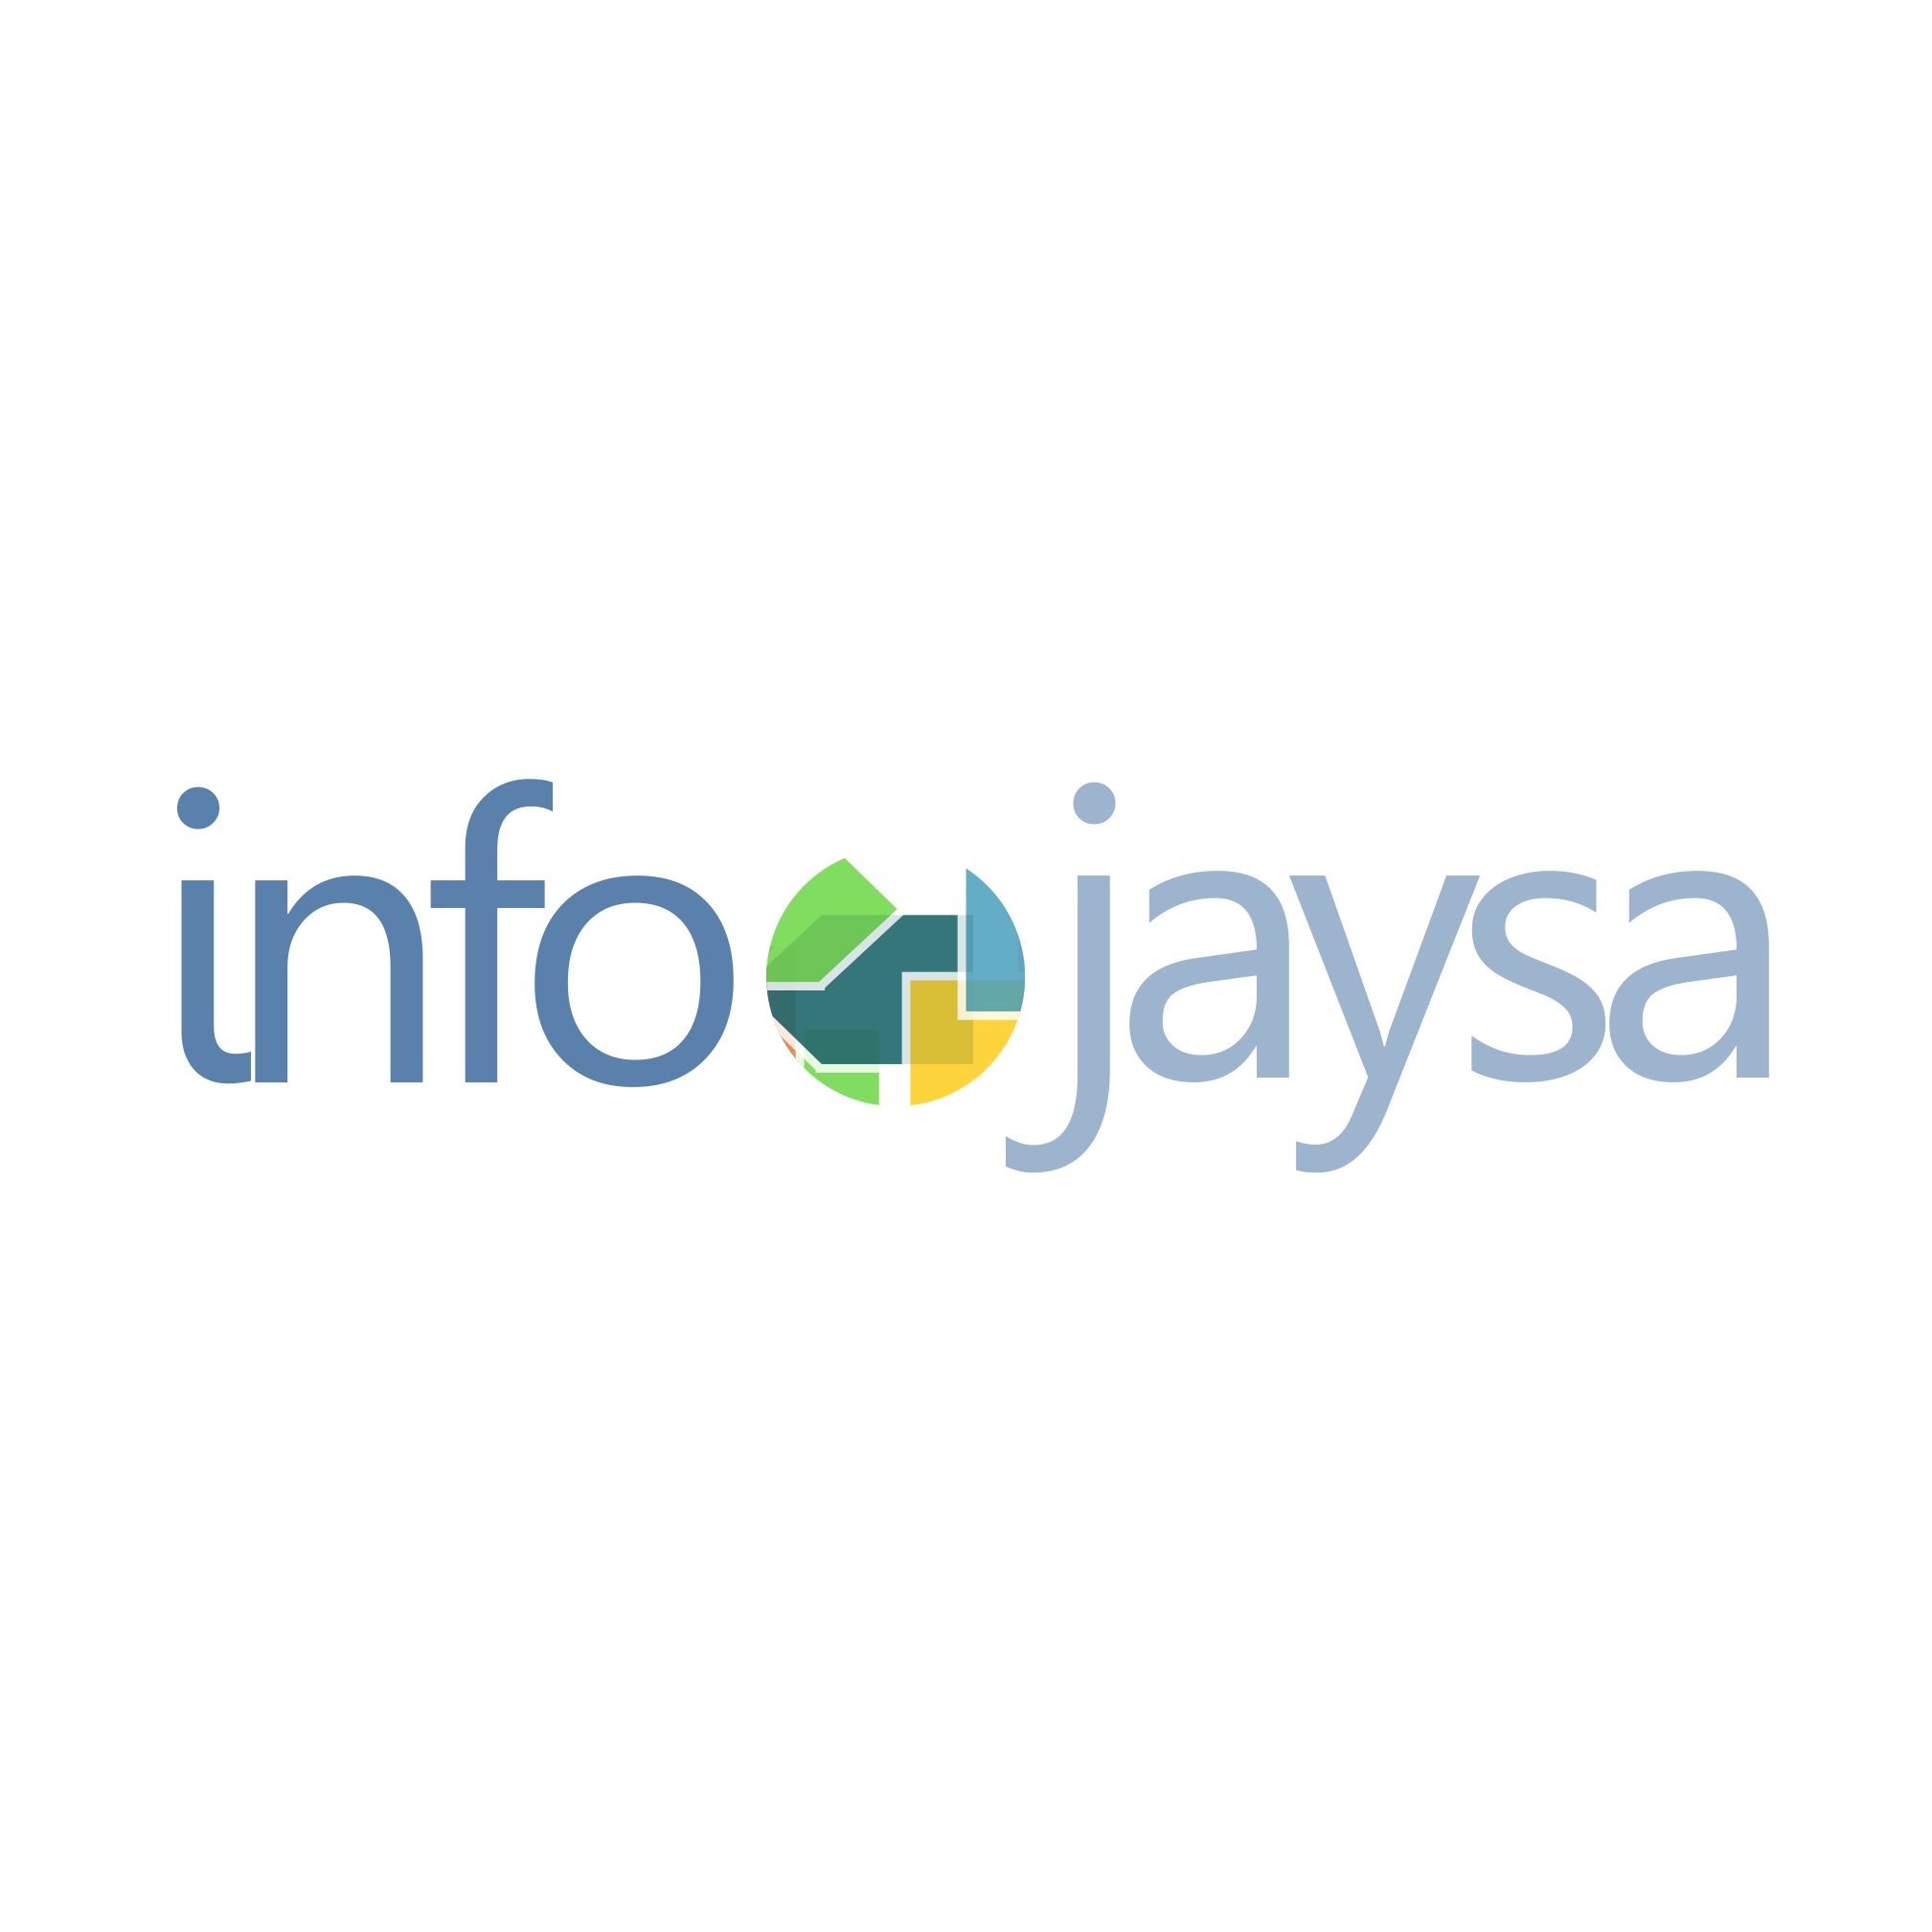 Infojaysa Logo